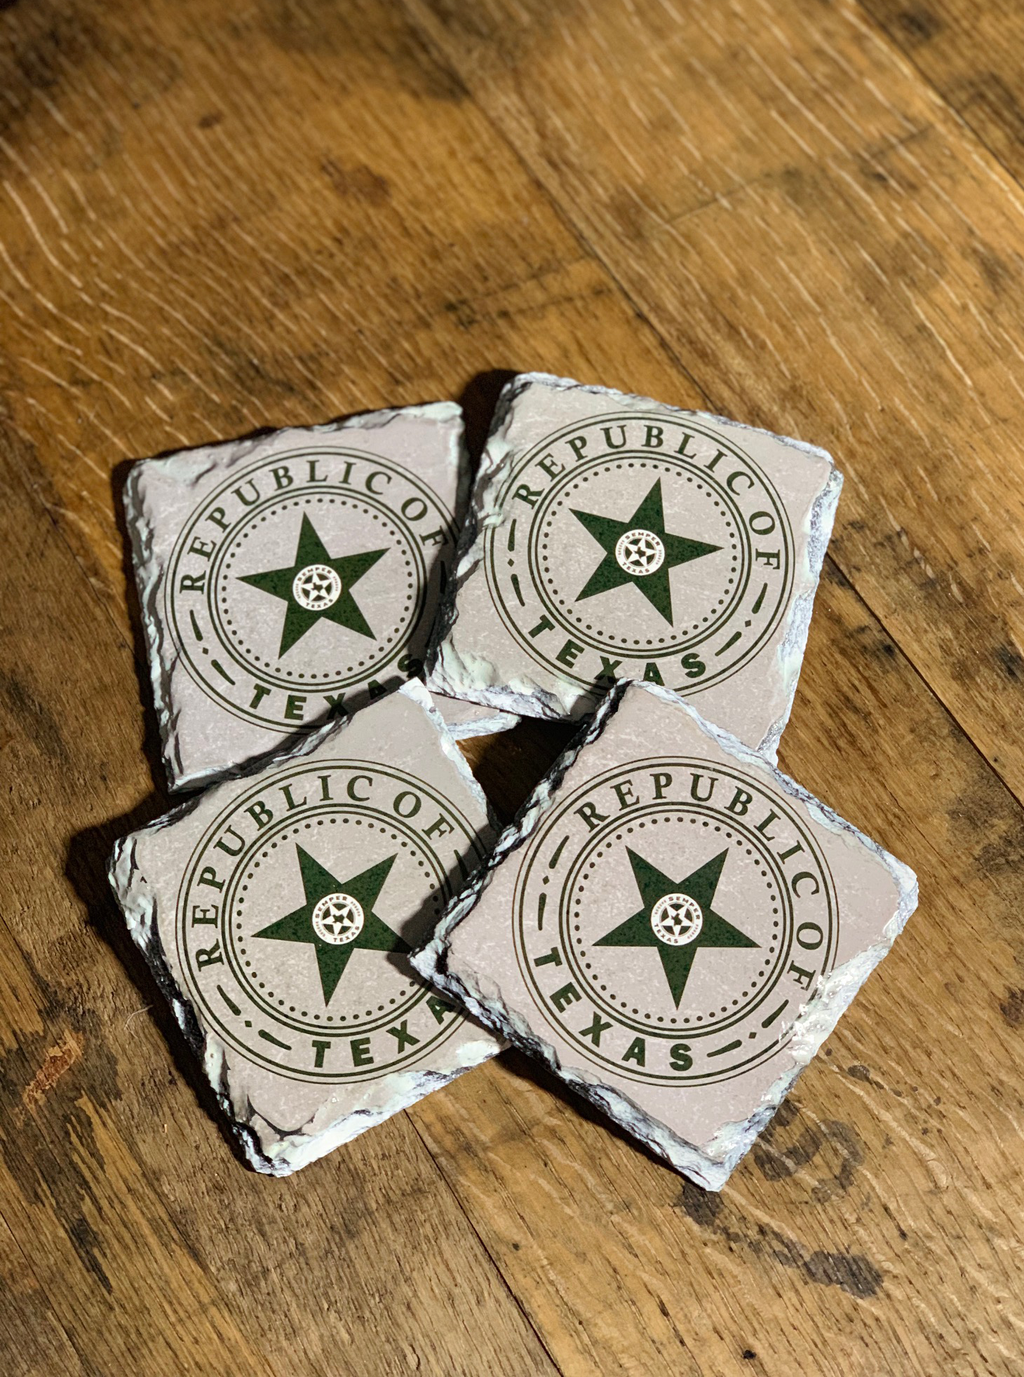 Republic of Texas Slate Coasters (set of 4)